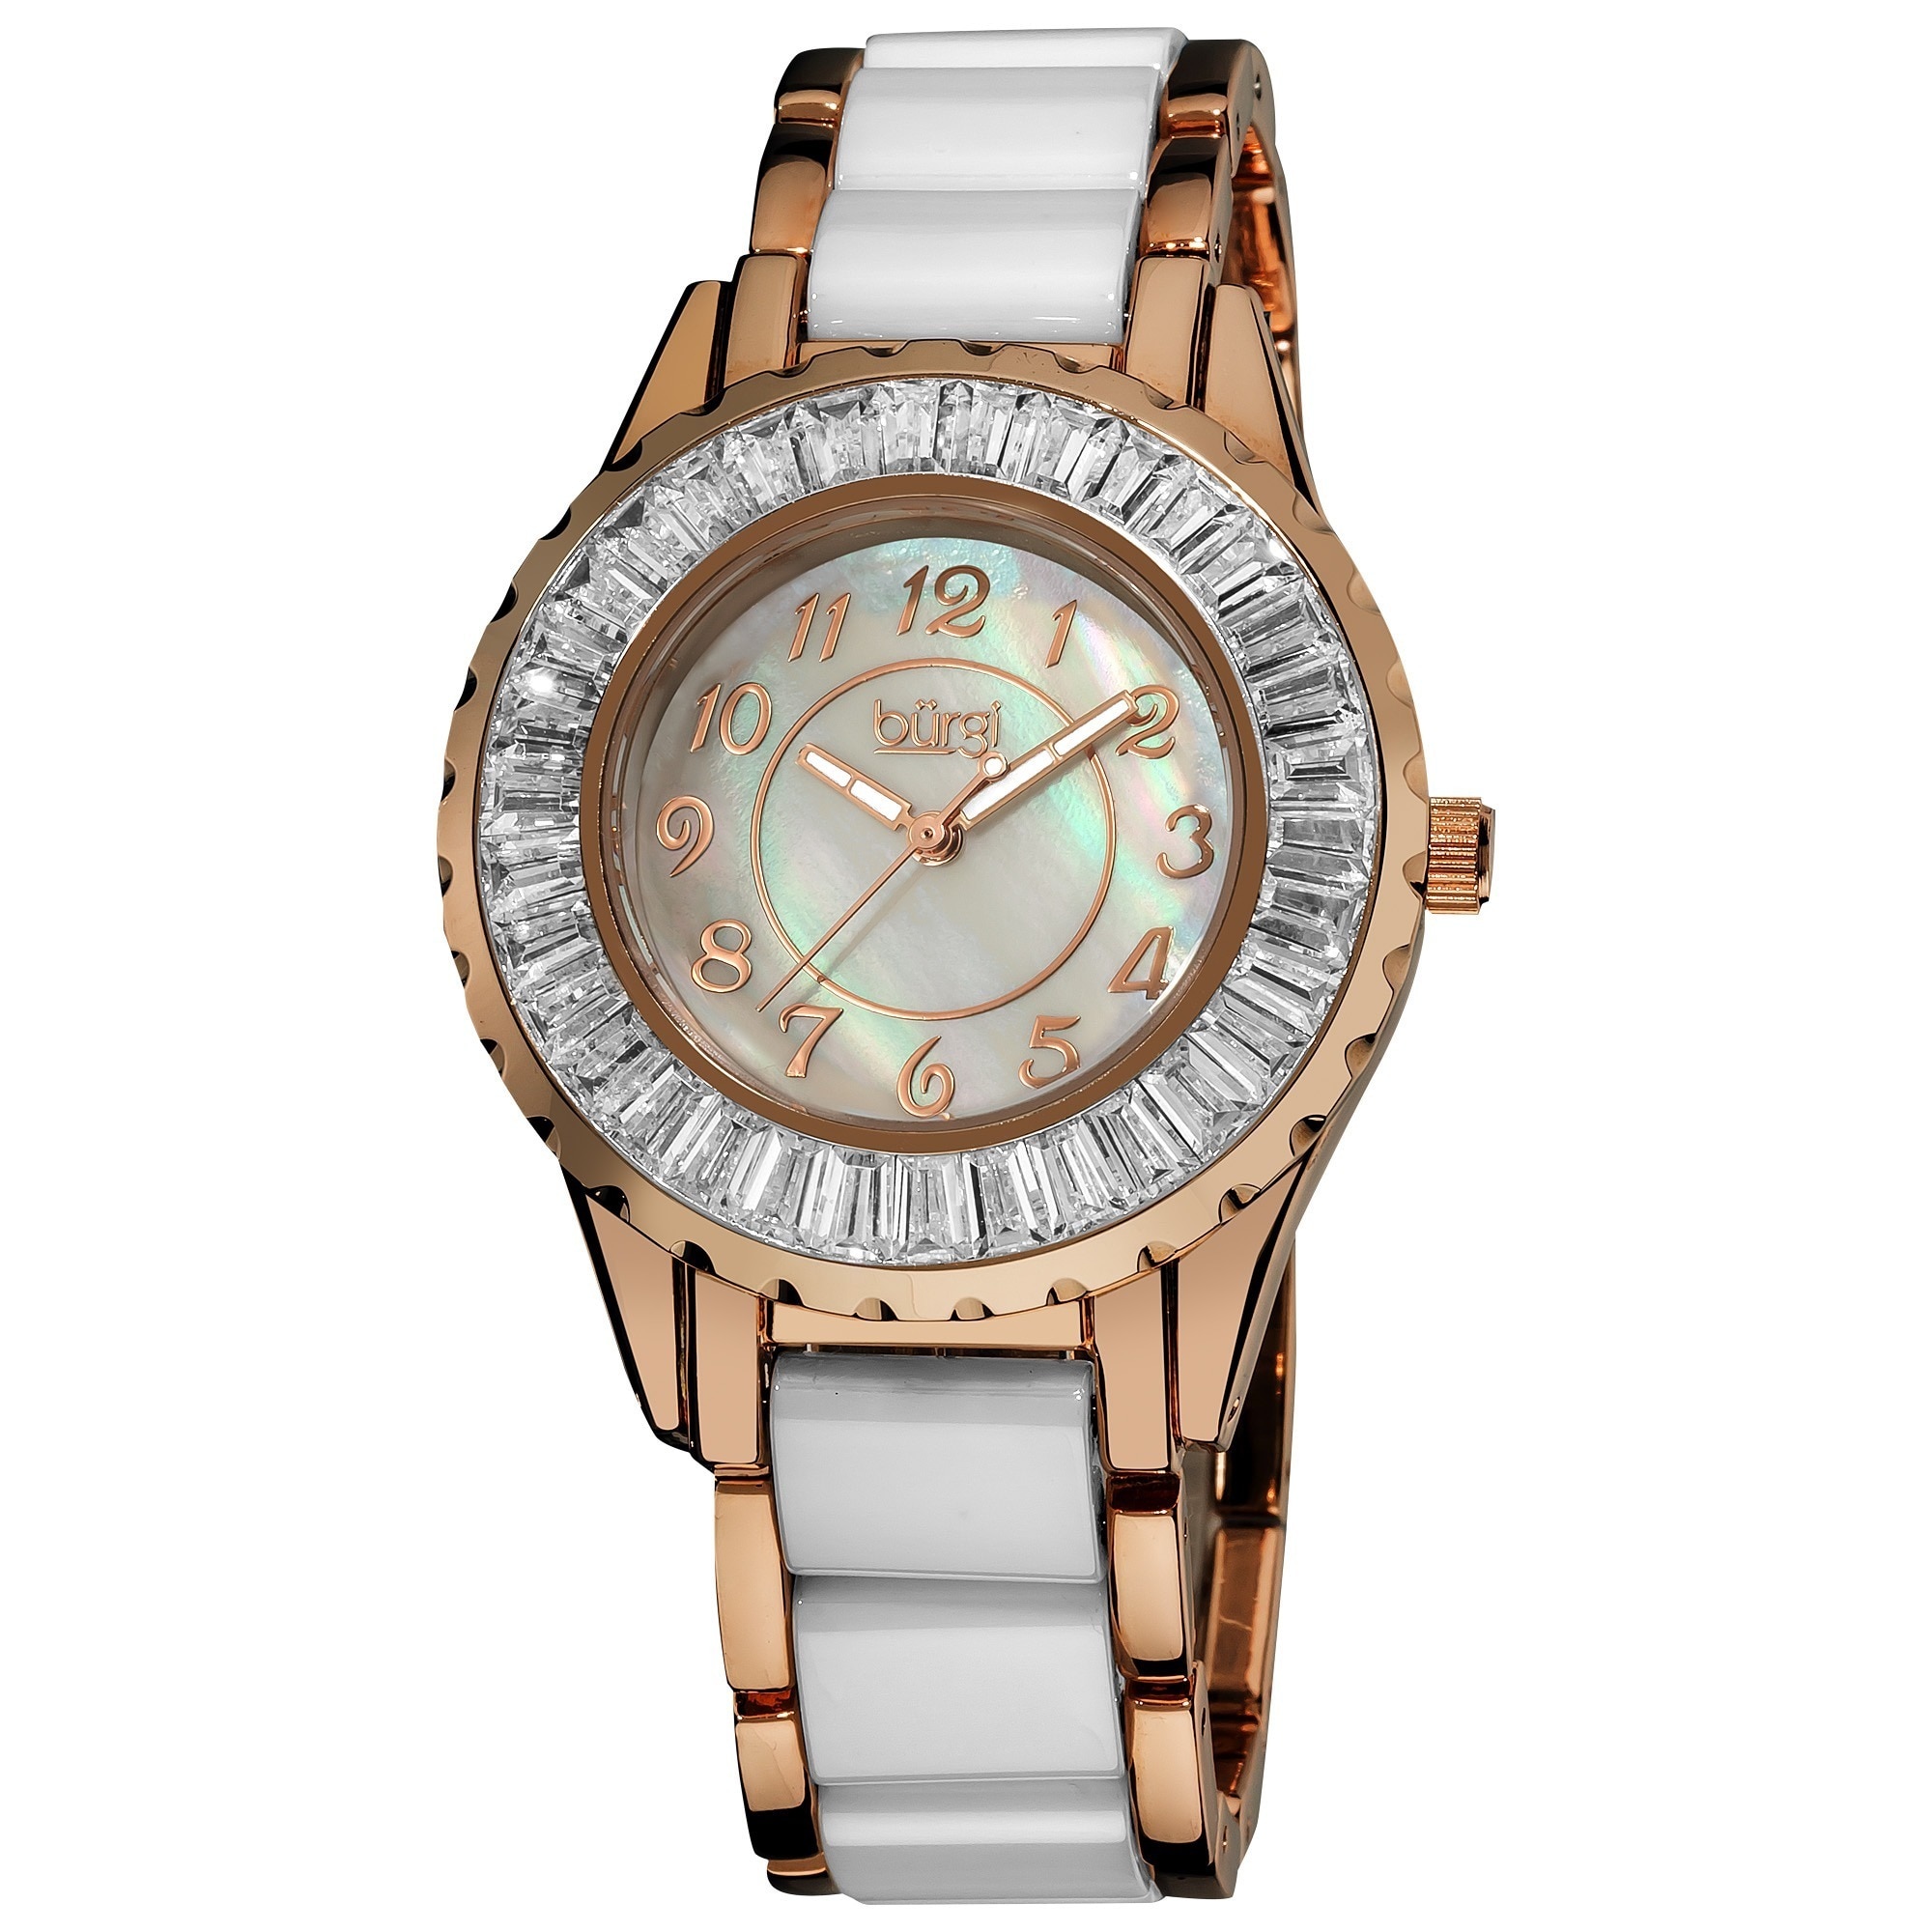 bracelet baguette quartz watch msrp $ 595 00 today $ 103 99 off msrp